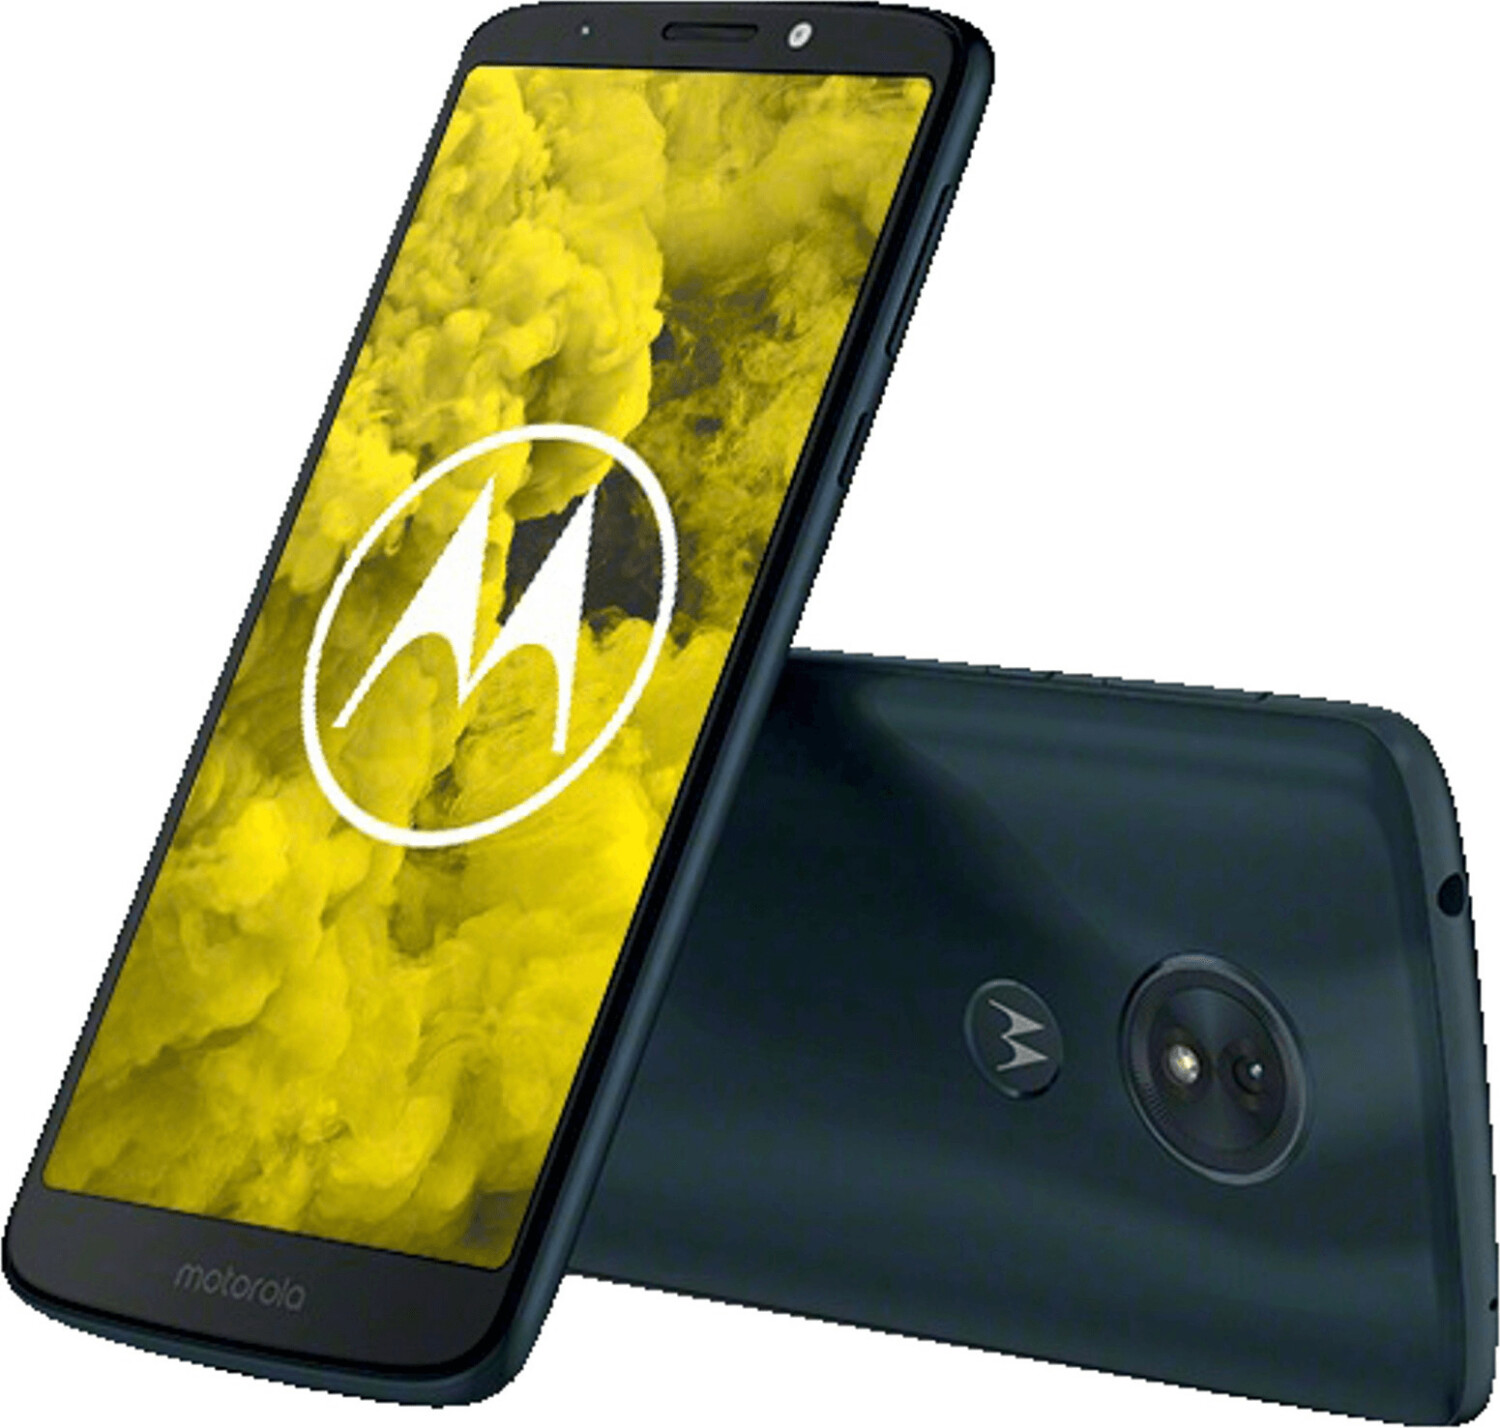 Motorola Moto G6 Play deep indigo